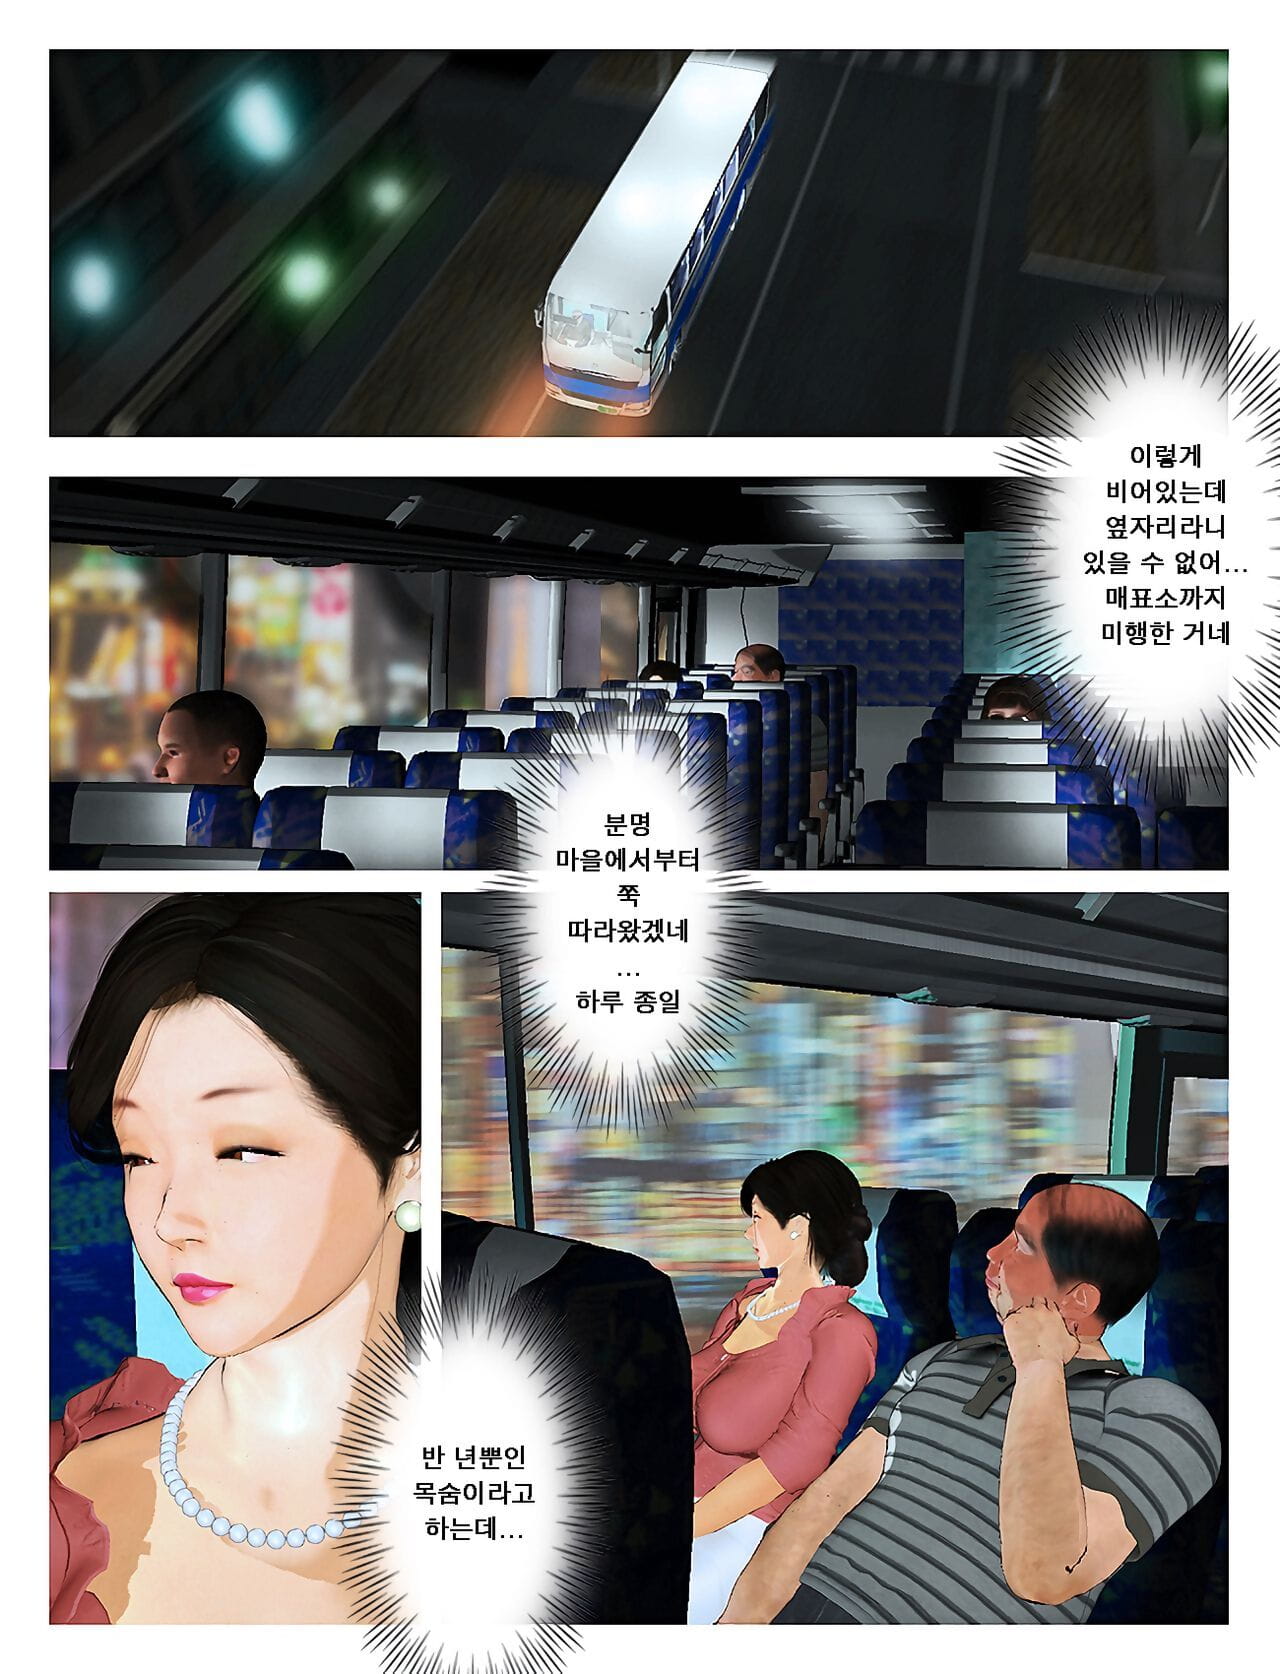 Kill the King Kyou no Misako-san 2019:2 - 오늘의 미사코씨 2019:2 Korean - part 2 page 1